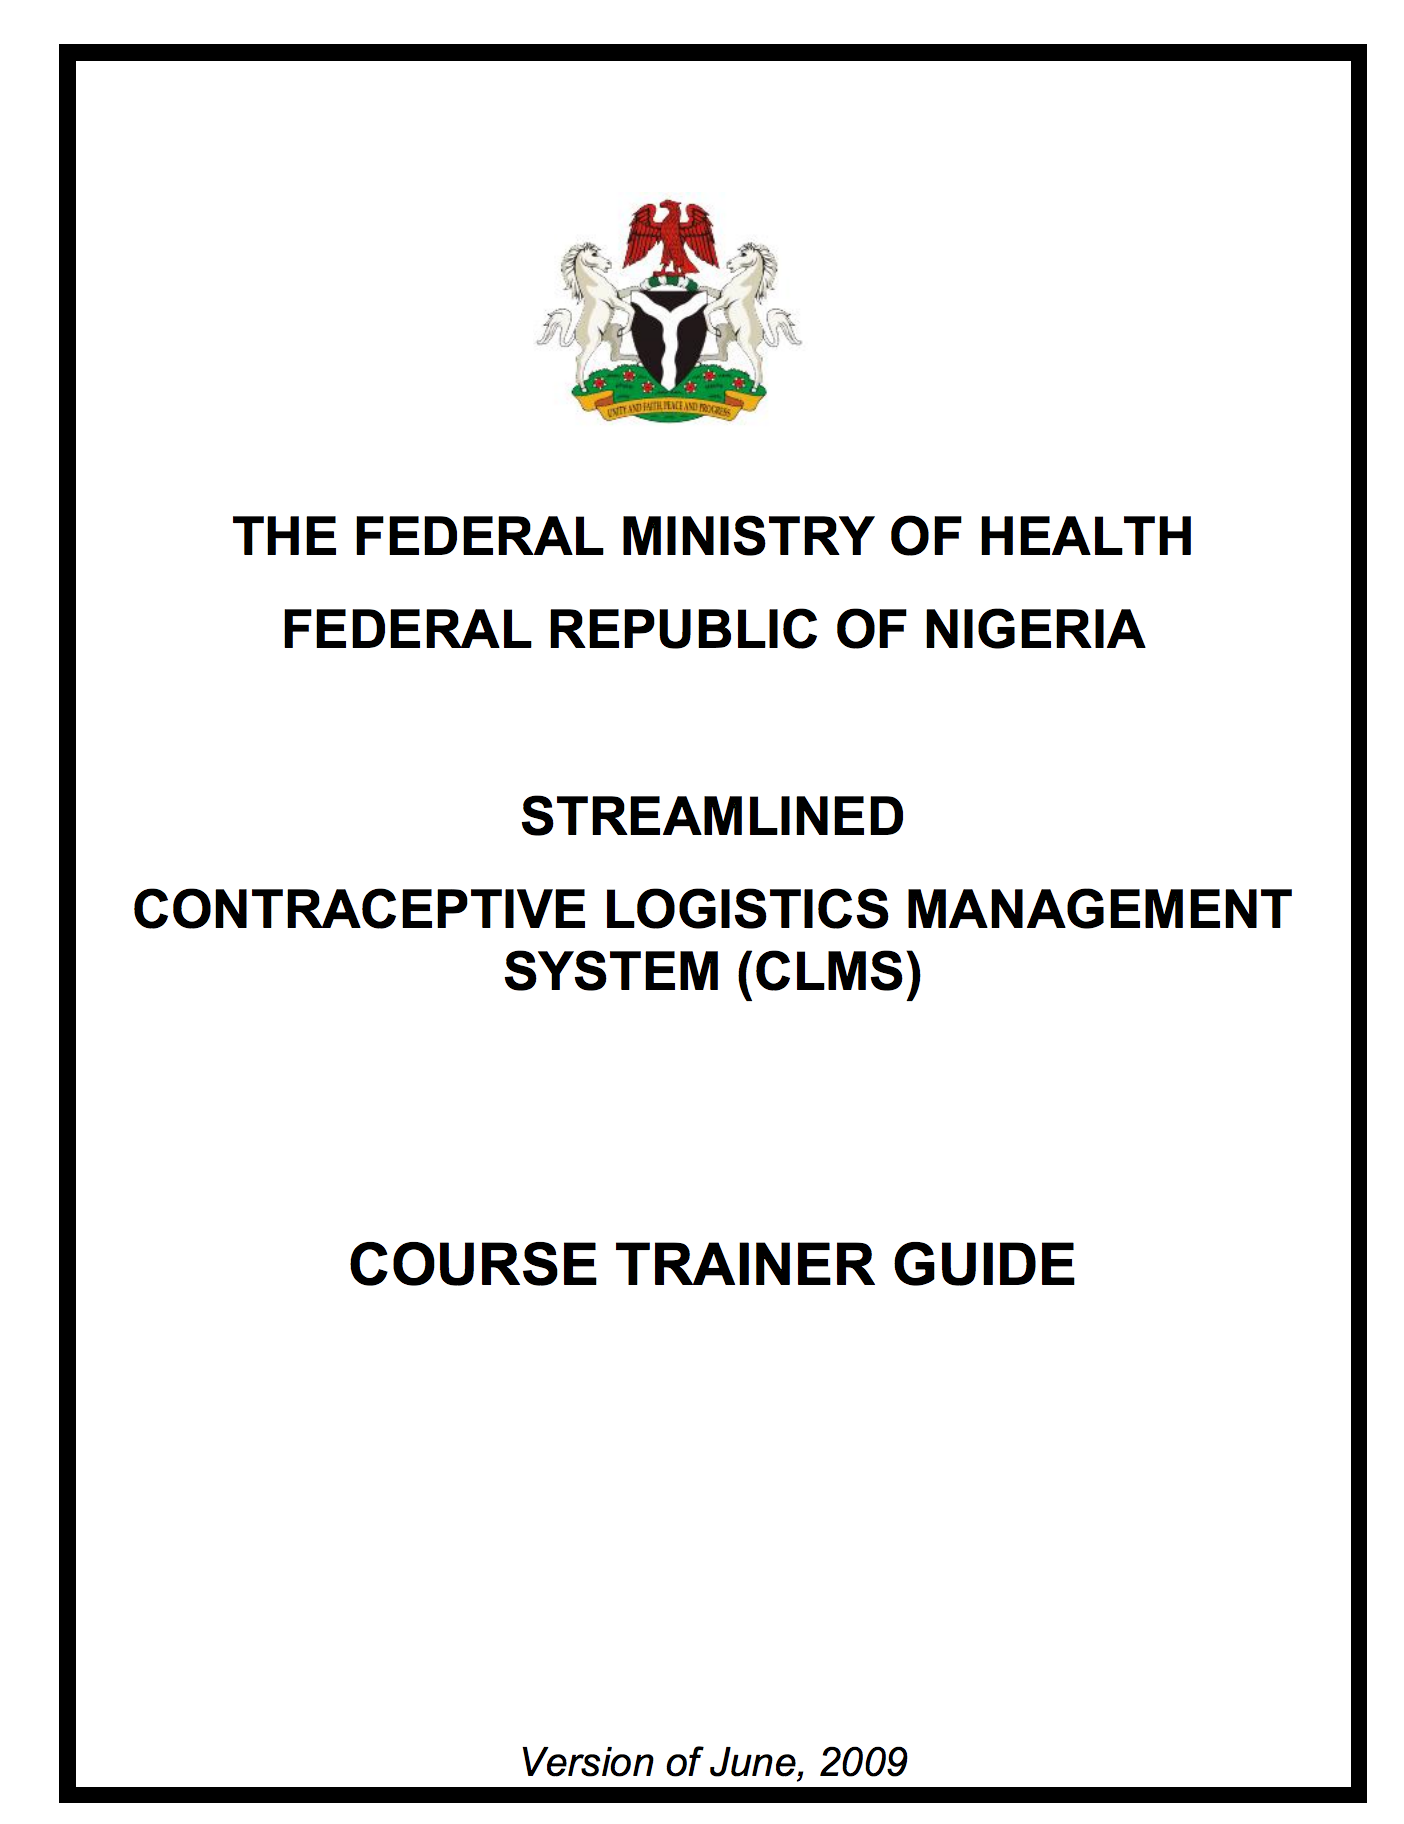 Contraceptive Logistics Management System